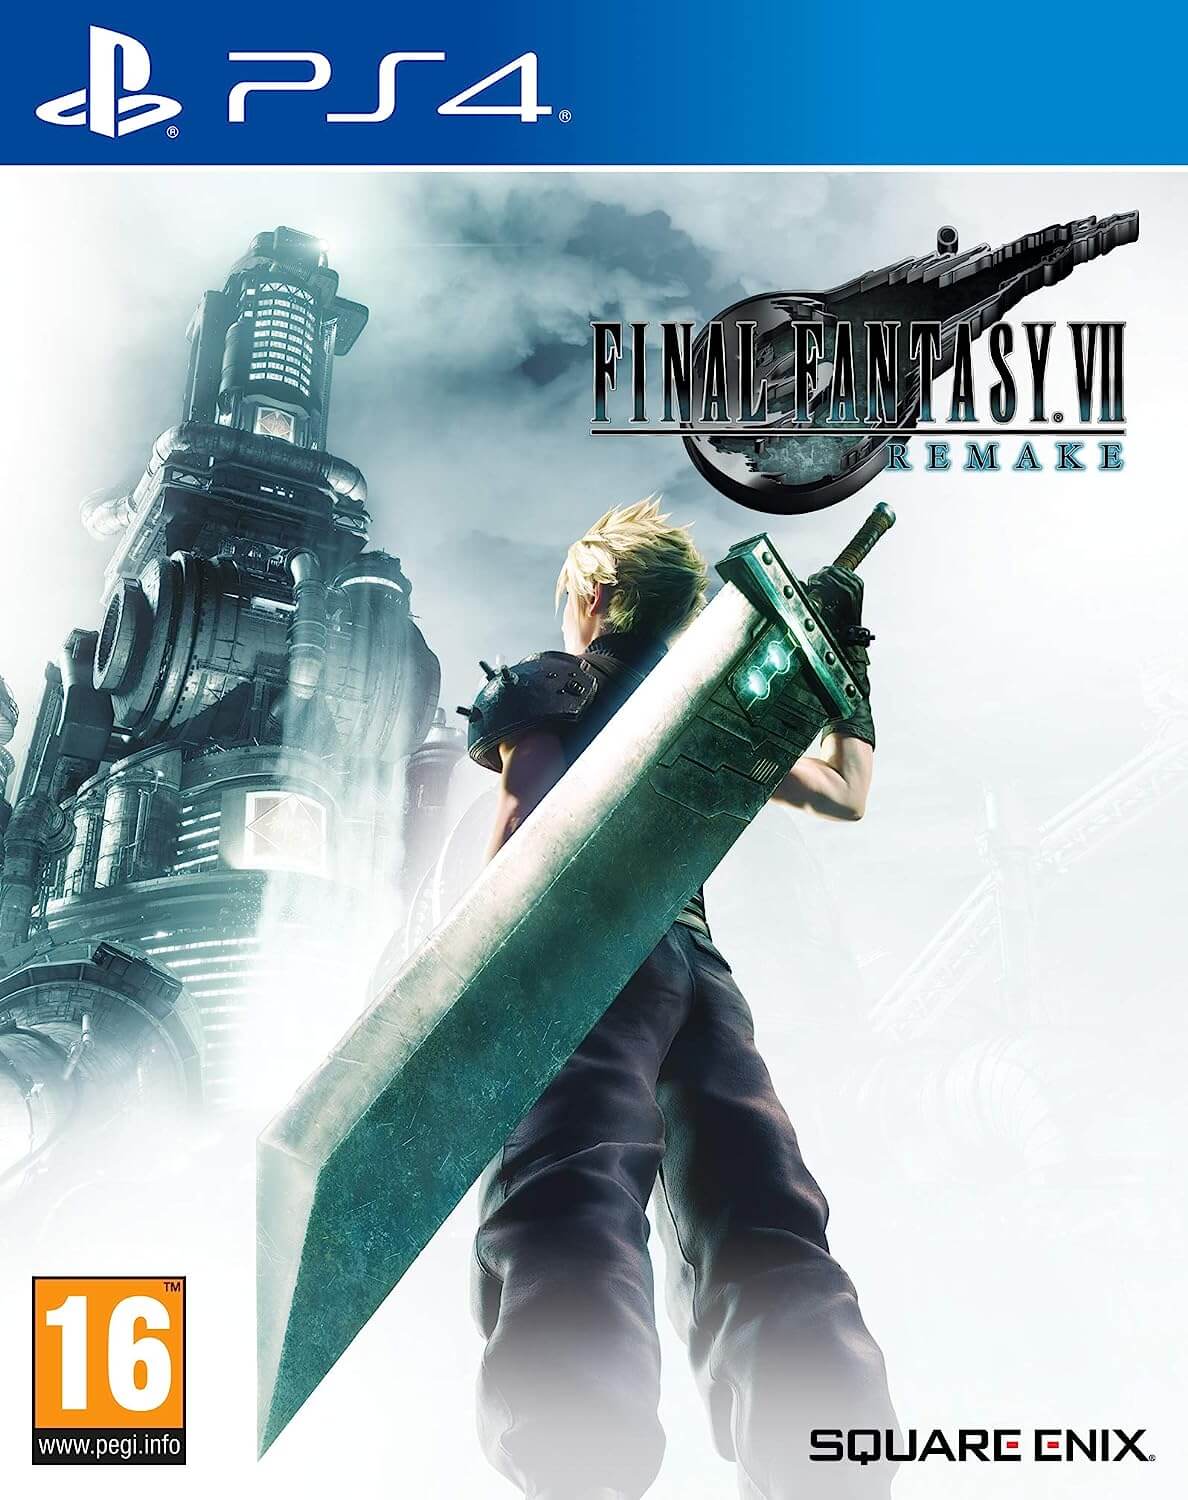 “Final Fantasy VII” (1997)